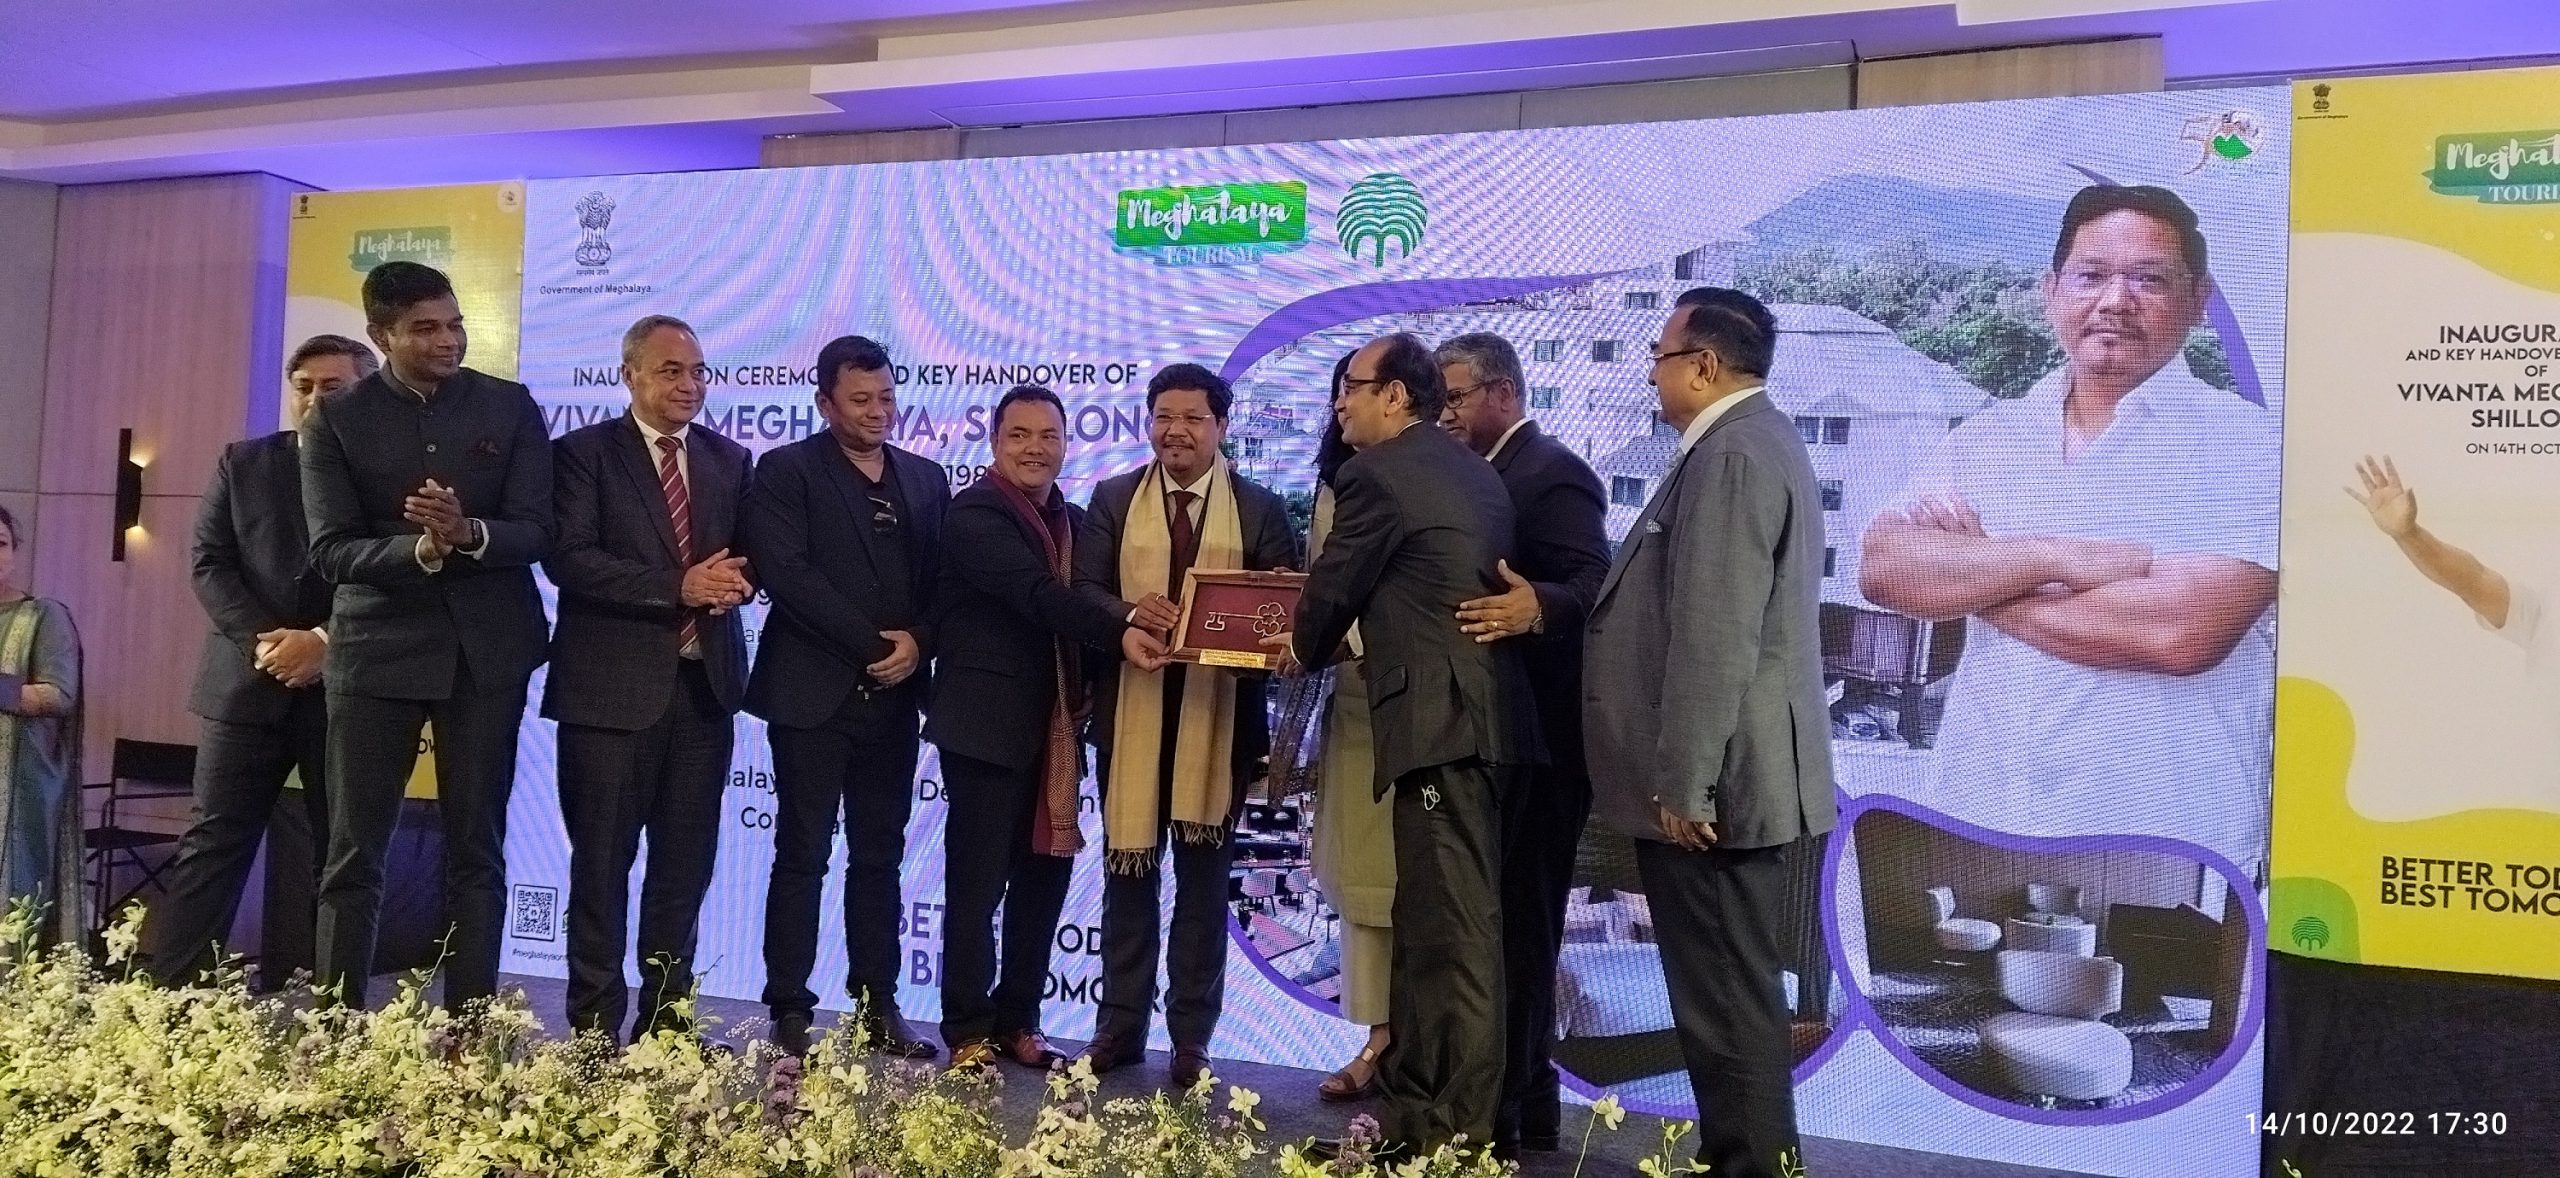 Vivanta Meghalaya, Shillong inaugurated by the Hon’ble Chief Minister of Meghalaya Shri. Conrad K. Sangma along with other dignitaries from Meghalya Tourism and hotels officials on Friday